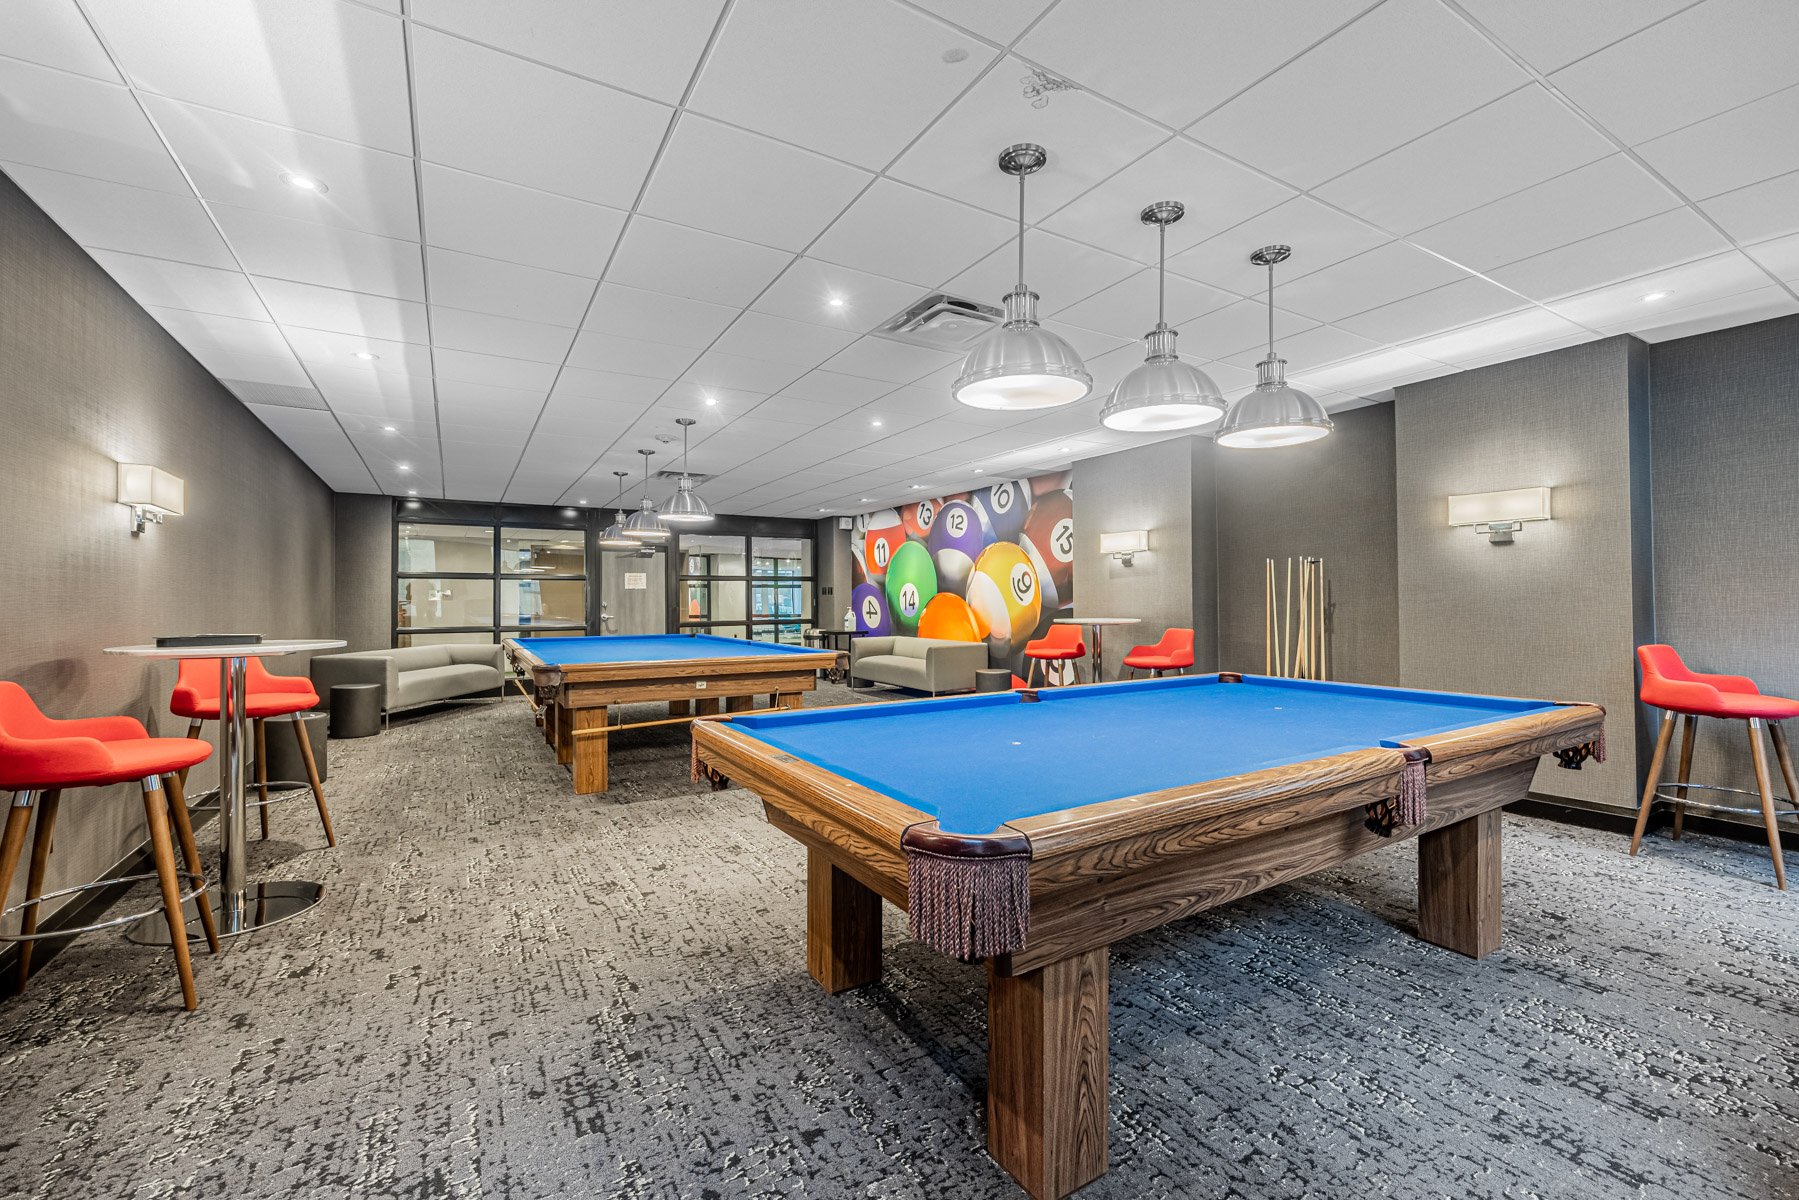 Lexington Condos rec centre with billiards tables.